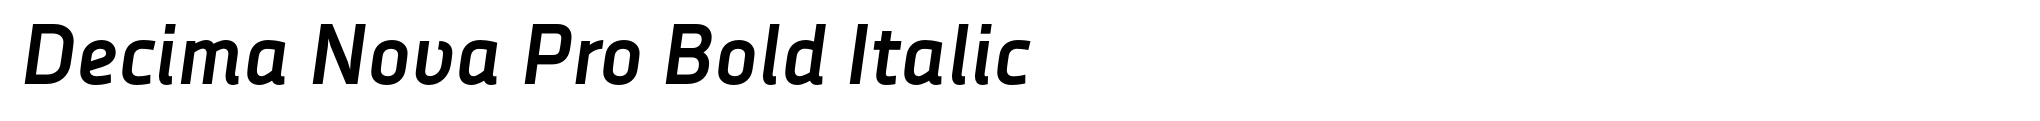 Decima Nova Pro Bold Italic image